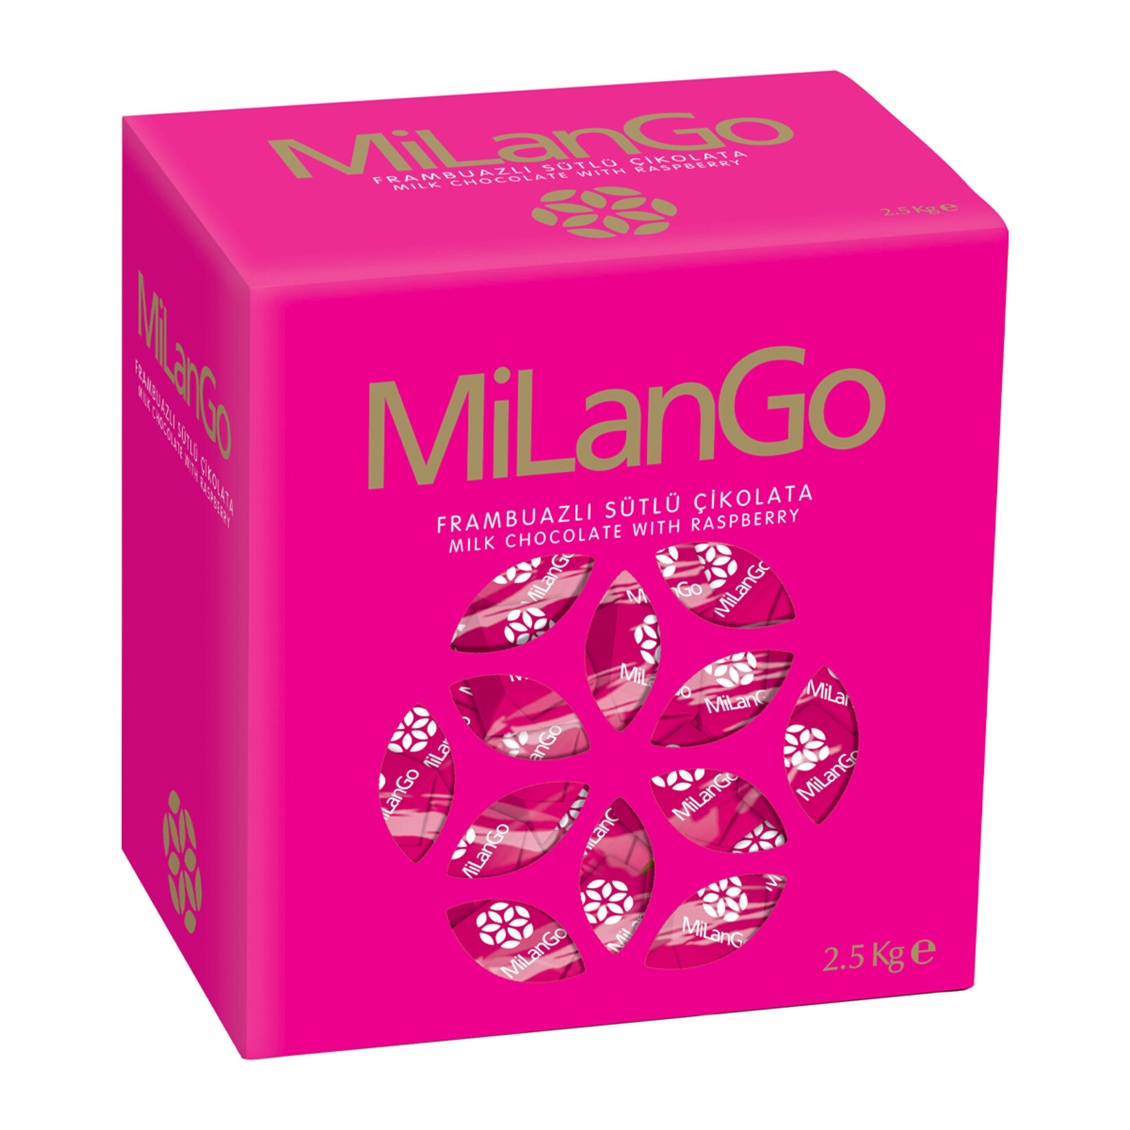 Şölen Milango Frambuazlı Çikolata kg - Onur Market